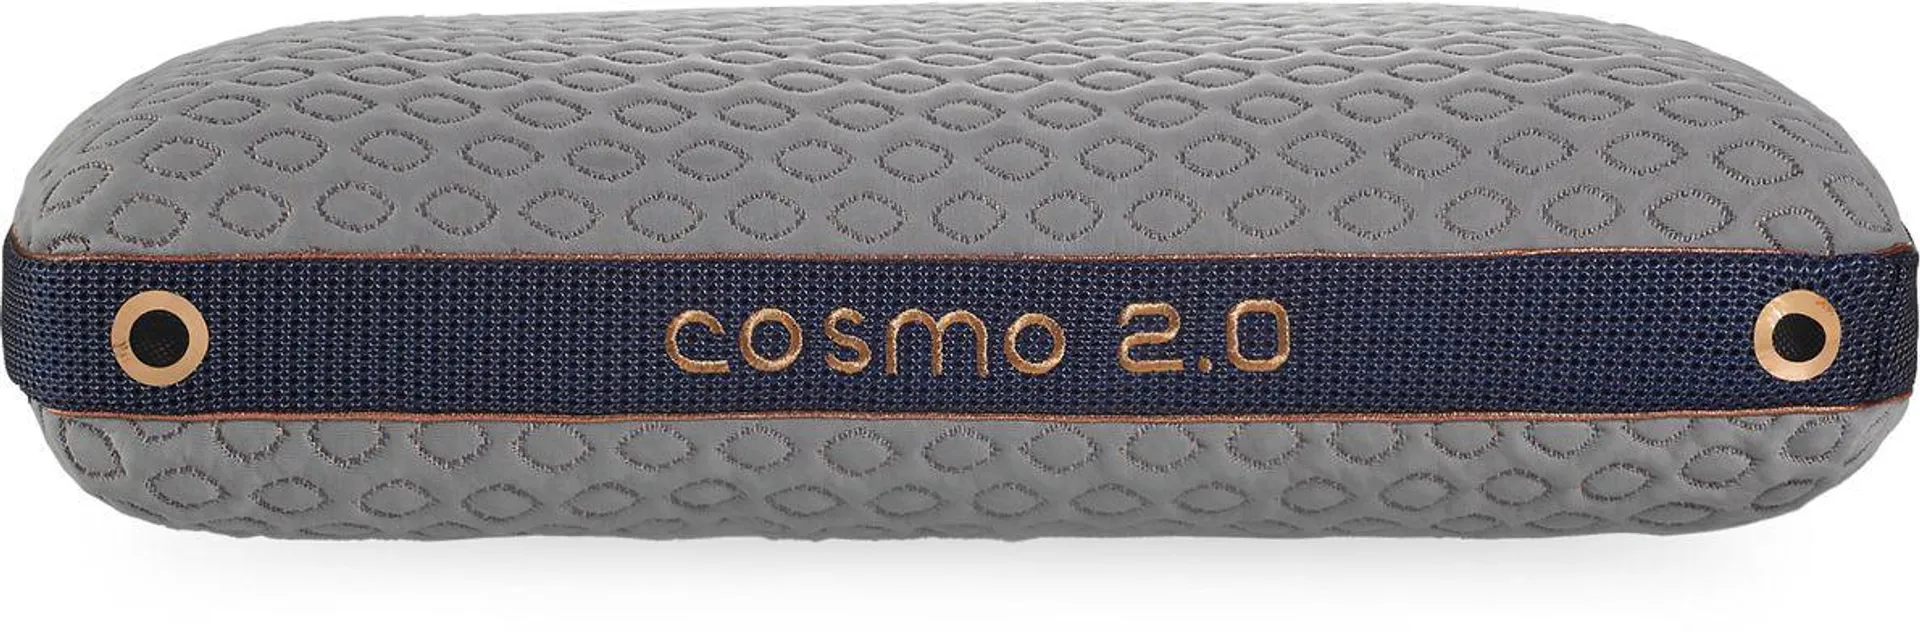 Bedgear Cosmo Performance 2.0 Standard Pillow